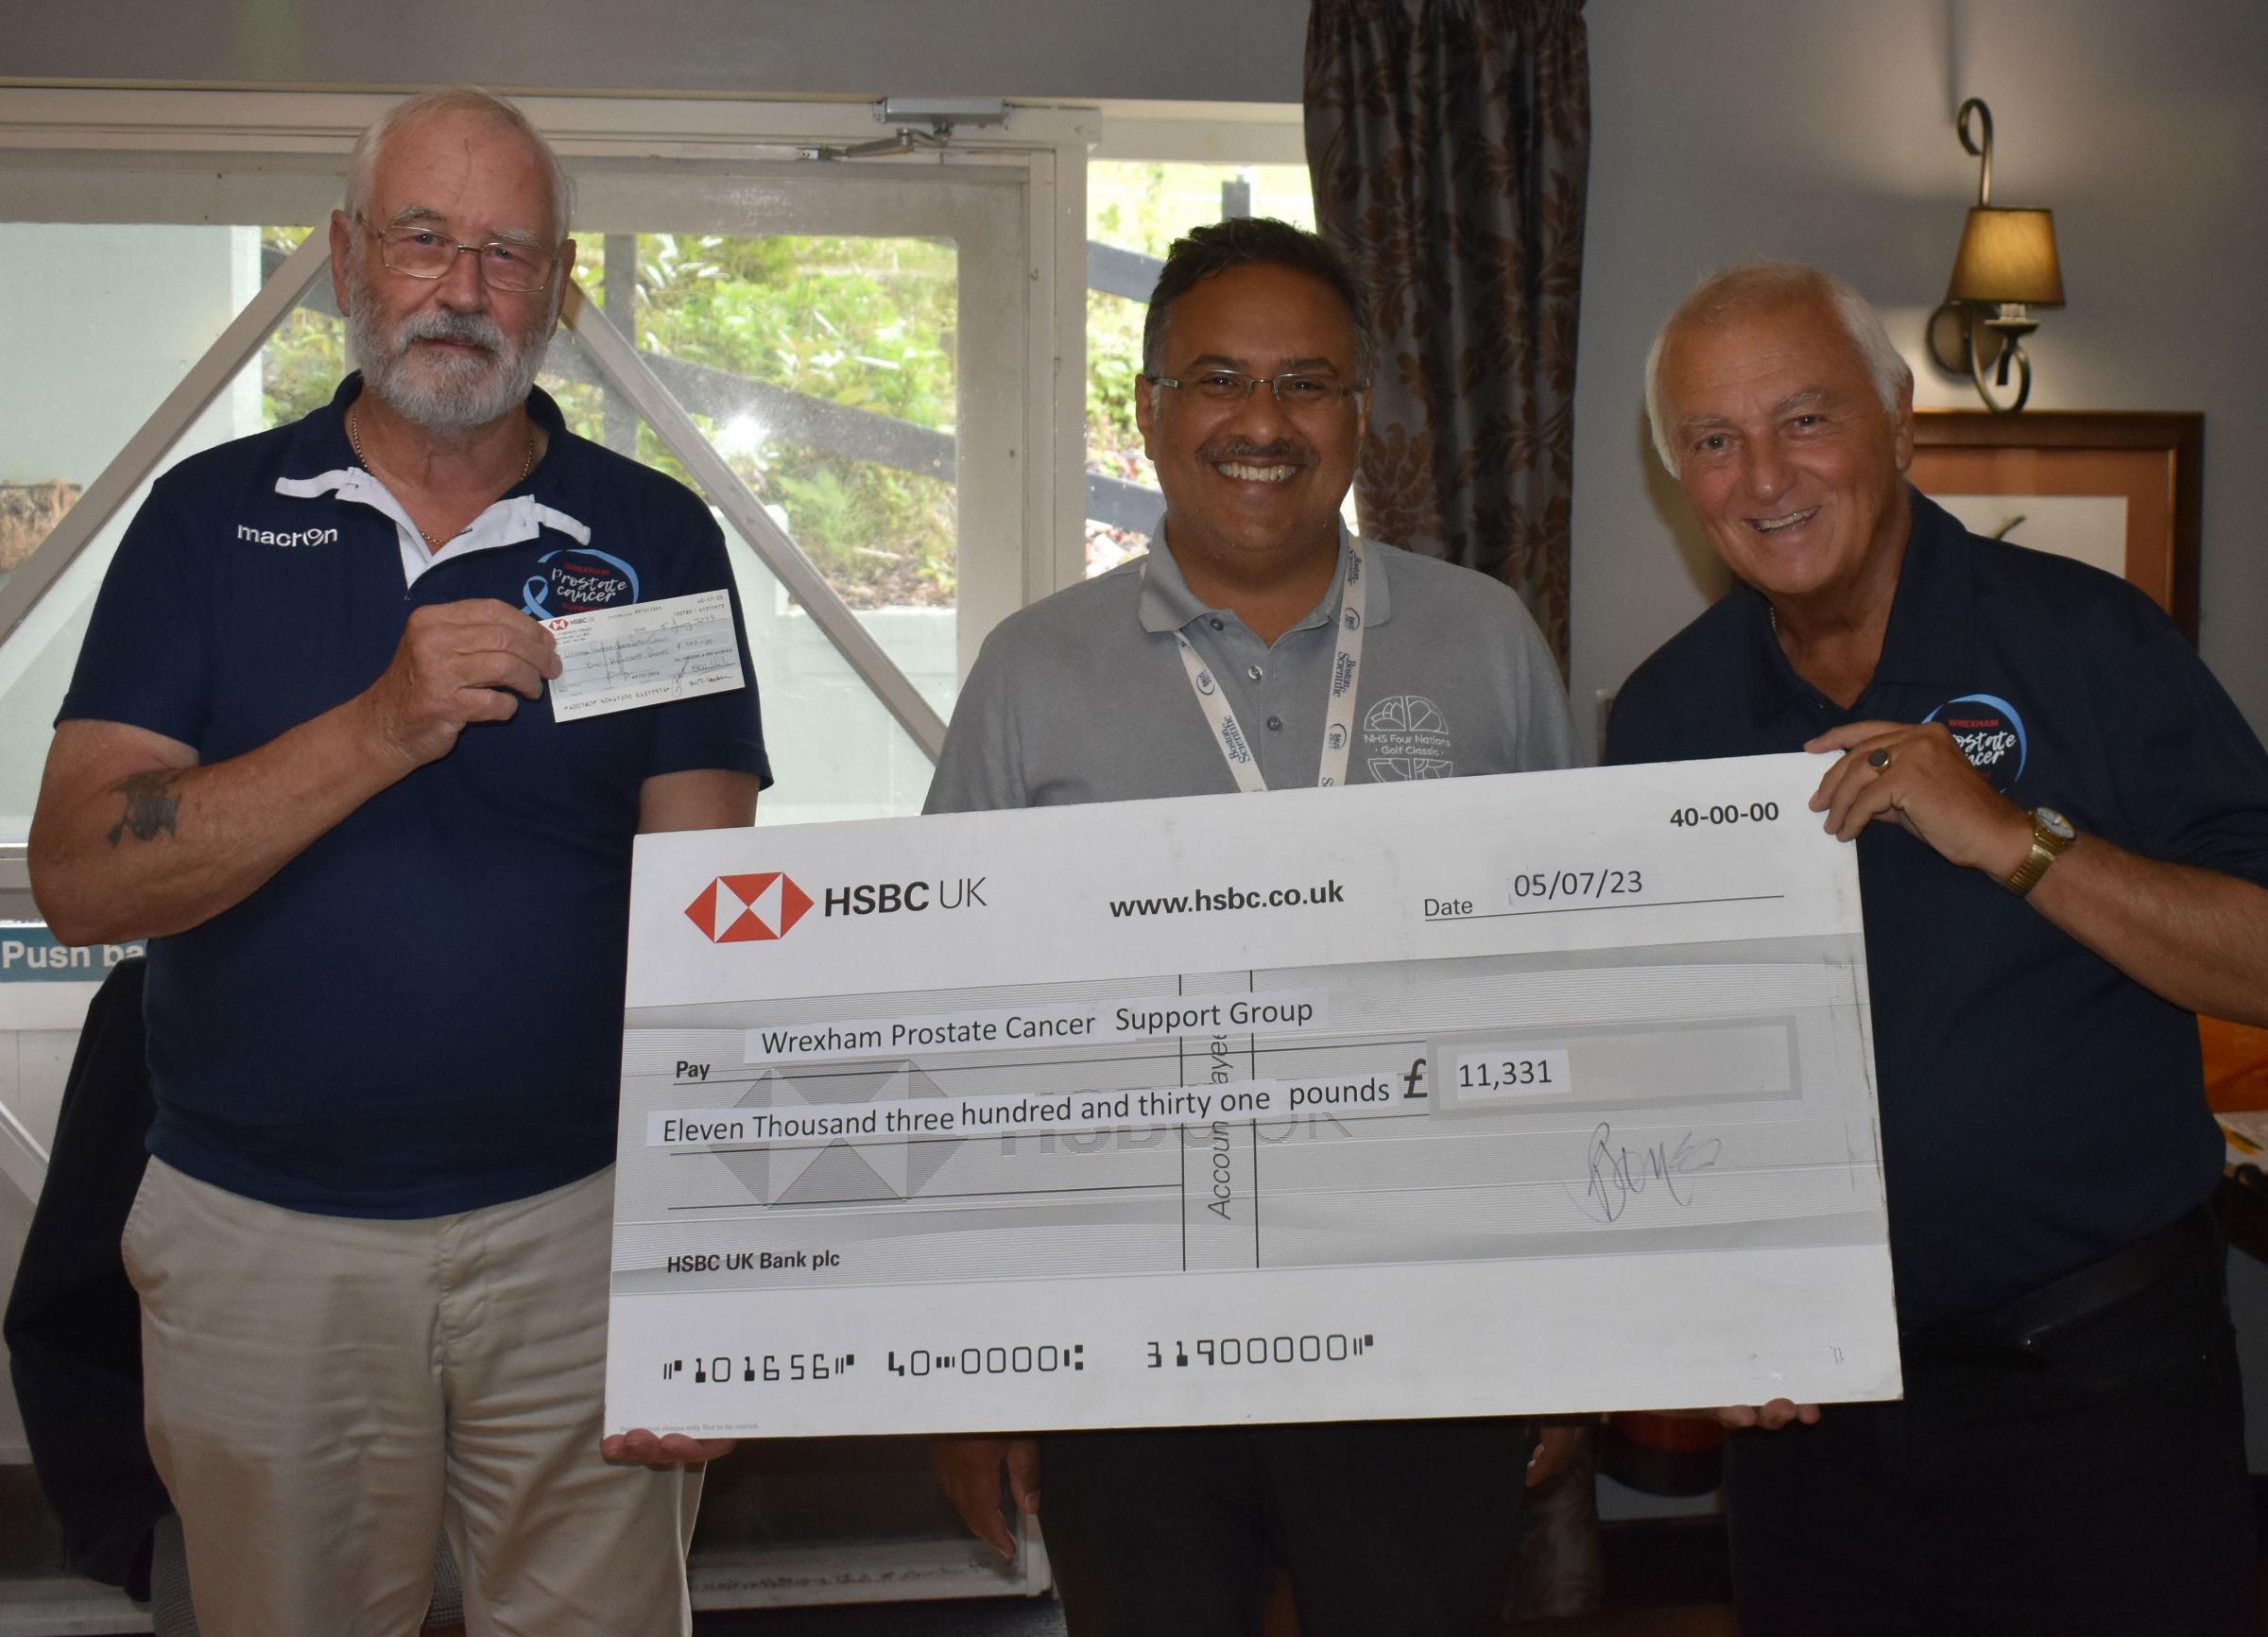 Club members Frank Maddocks and Phil Jones present Wrexham Maelor Hospital urologist Prof Iqbal Shergill with the cheque.